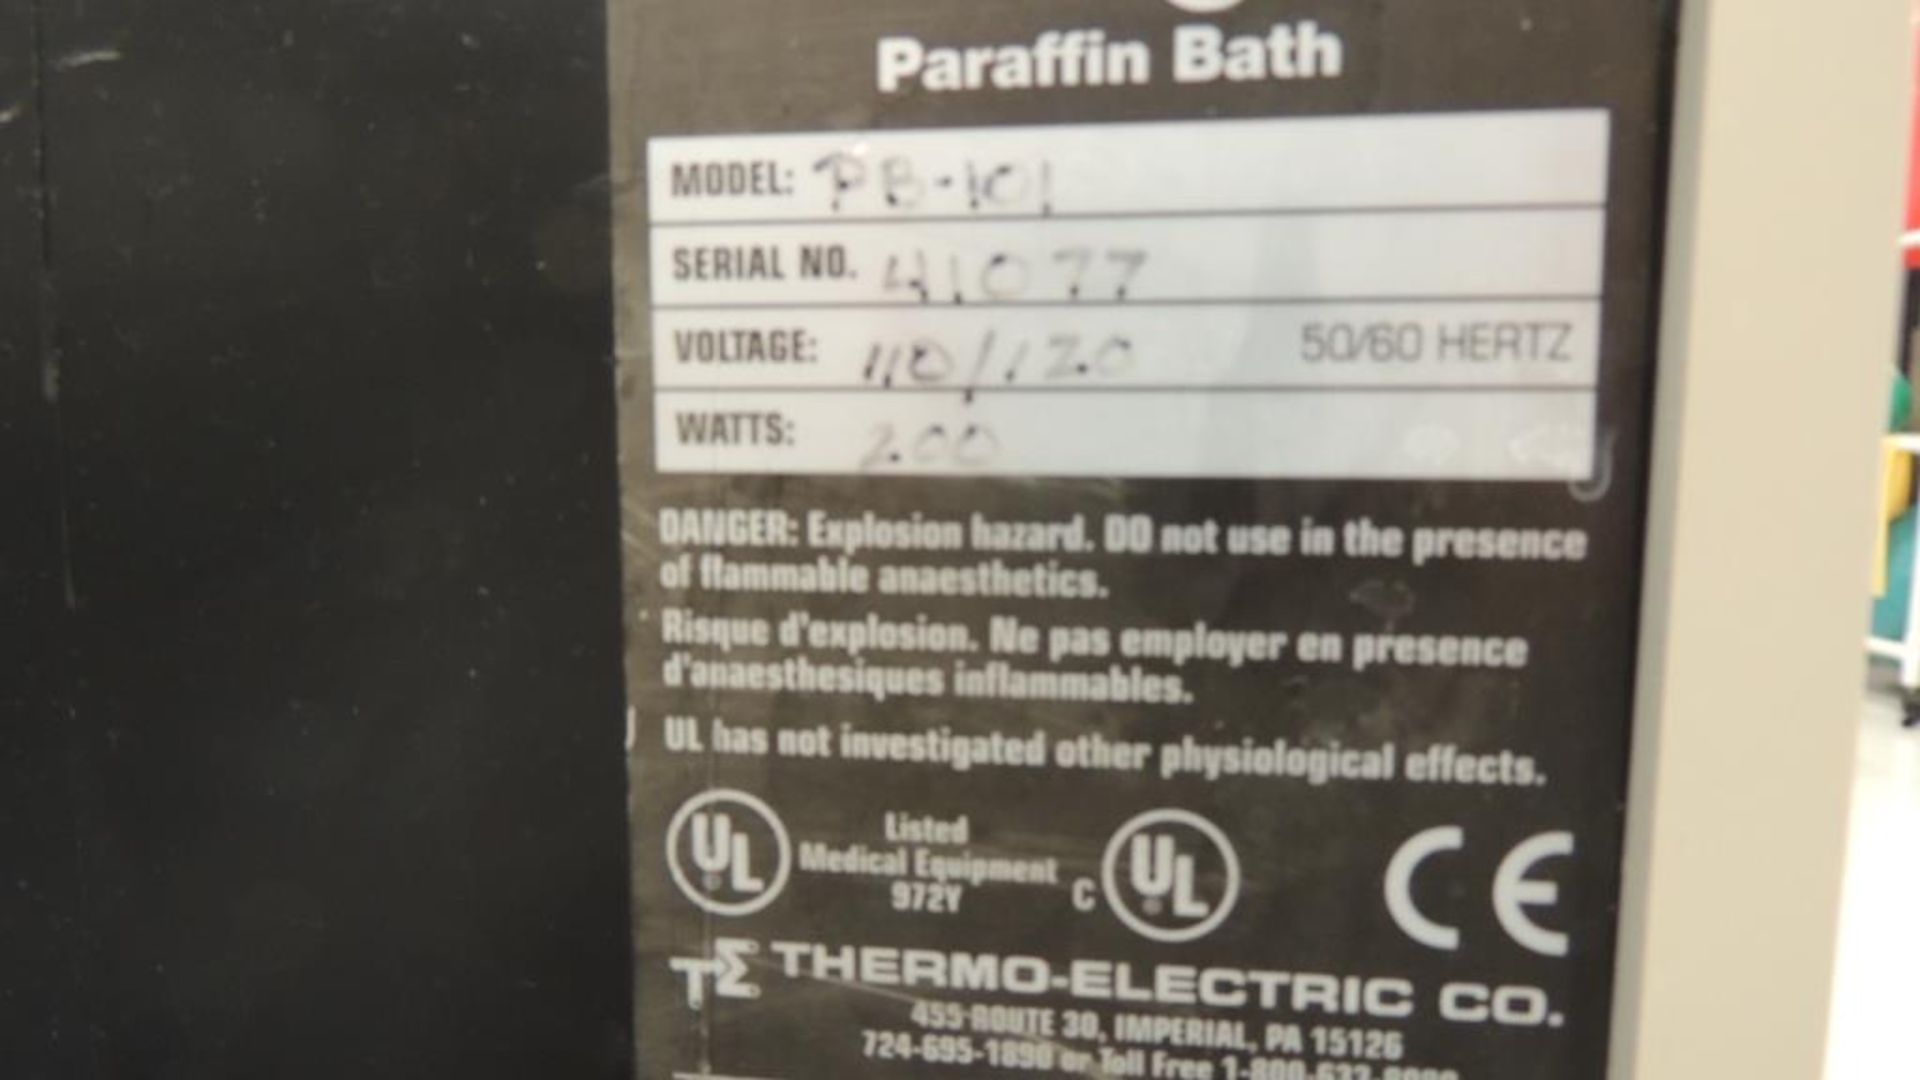 Paraffin bath - Image 6 of 6